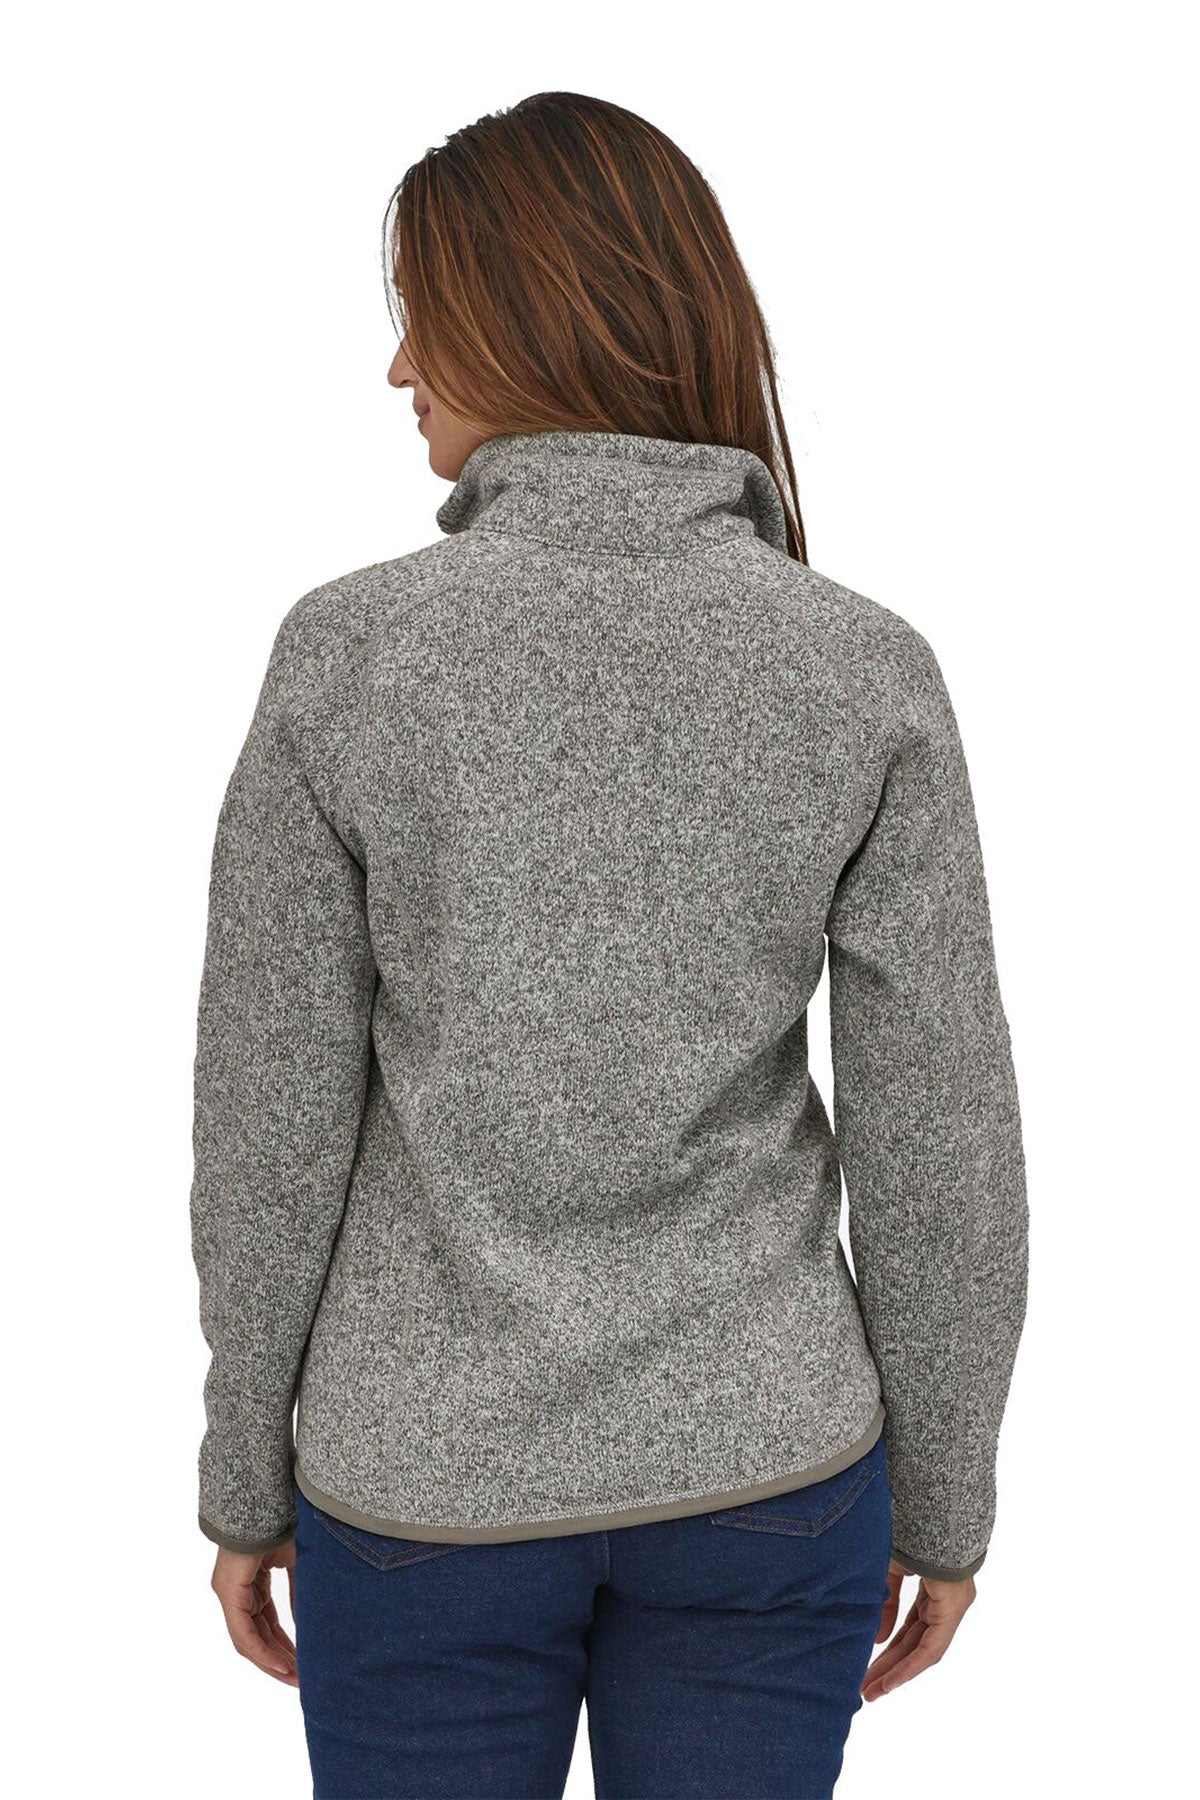 Women's Patagonia, Better Sweater Quarter Zip